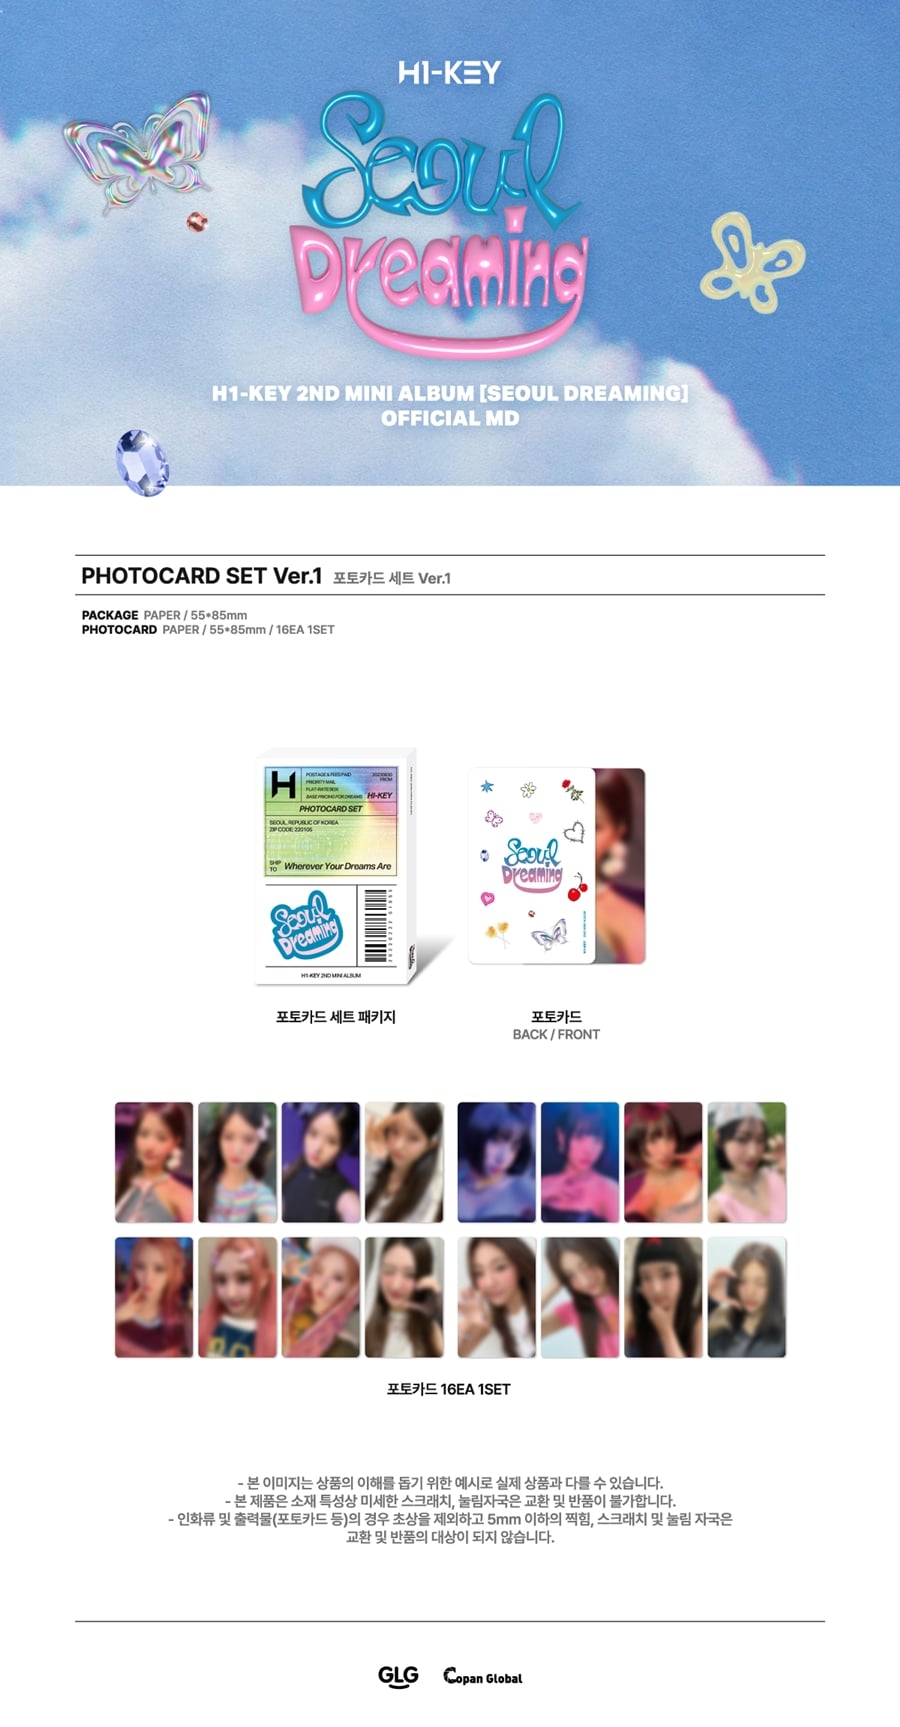 h1-key-01-photocard-set-ver-1-seoul-dreaming-md-wholesales